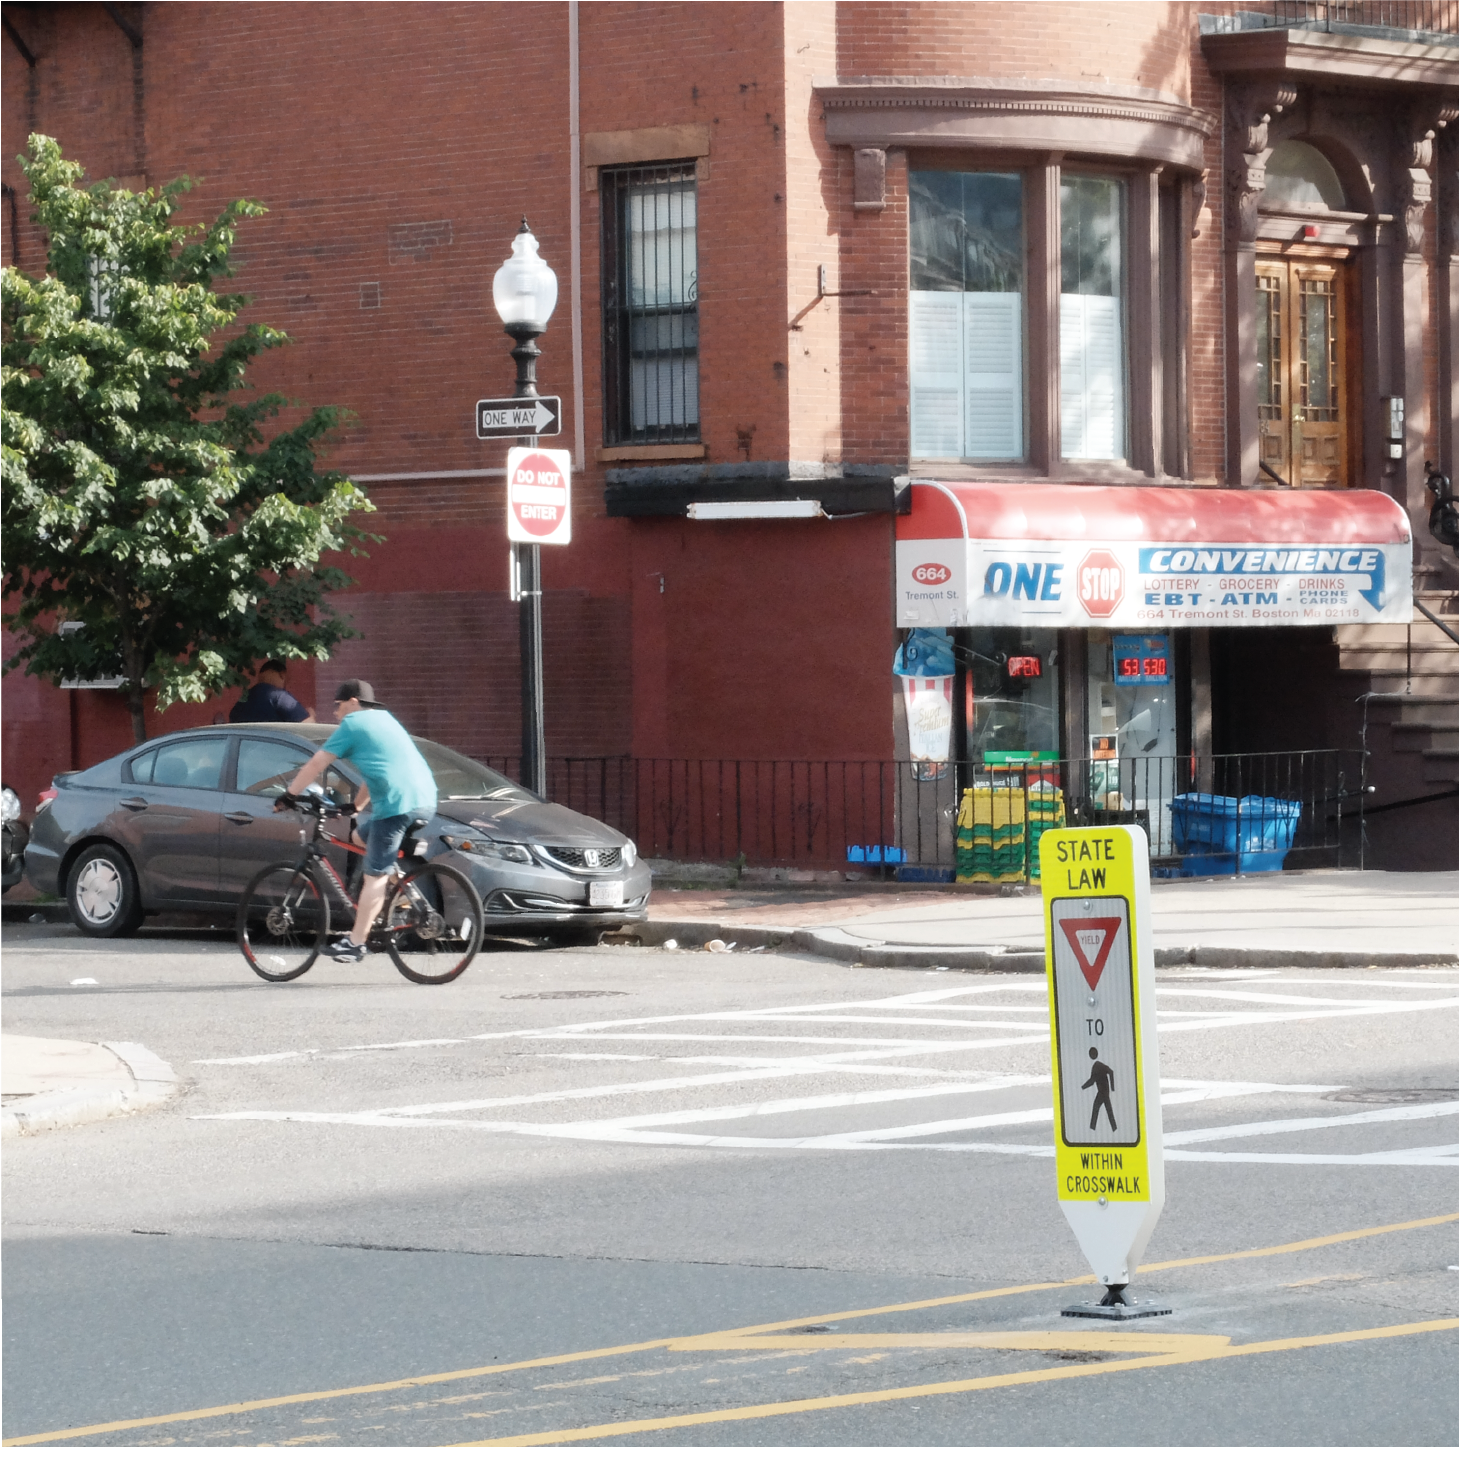 An in-street yield to pedestrian